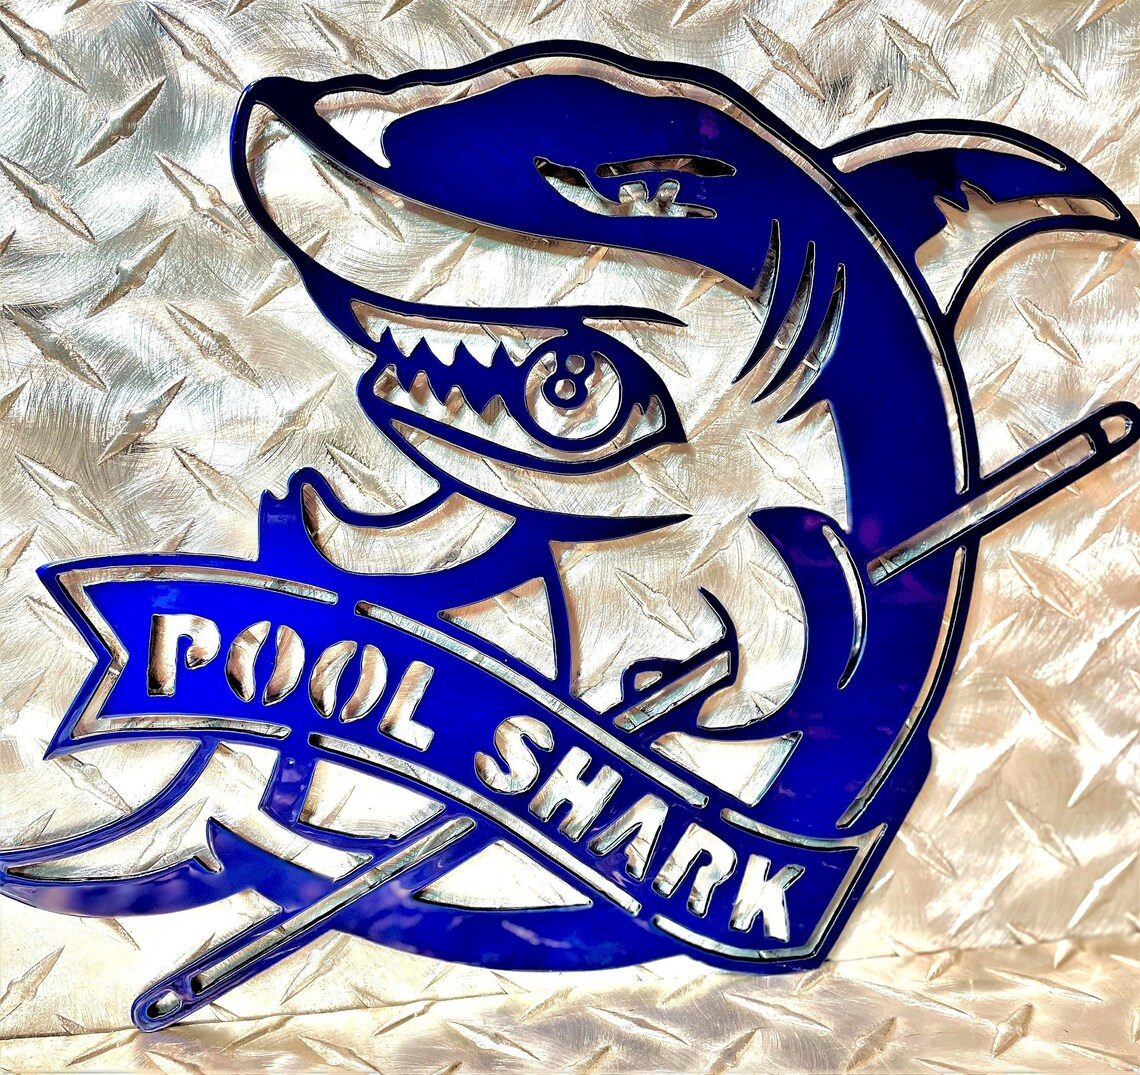 Billards Pool Shark Metal Wall Art Sign & Gift Decor